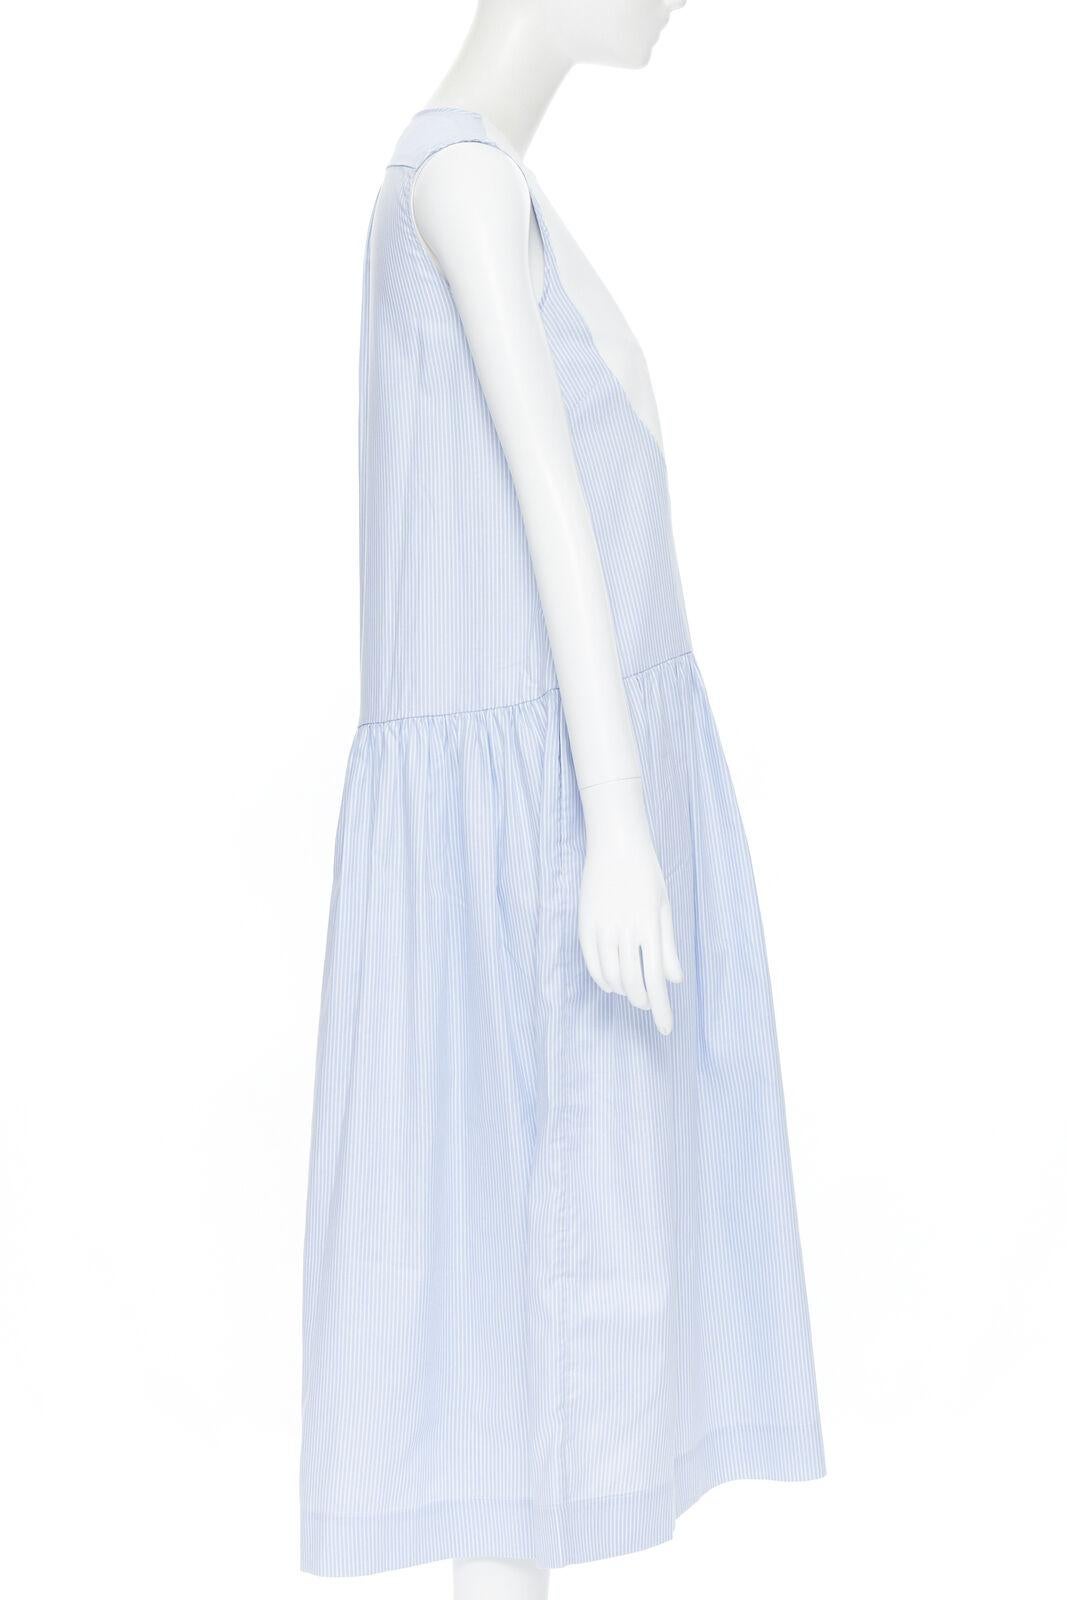 PALMER HARDING 100% cotton white bib front blue striped summer dress UK8 XS For Sale 1